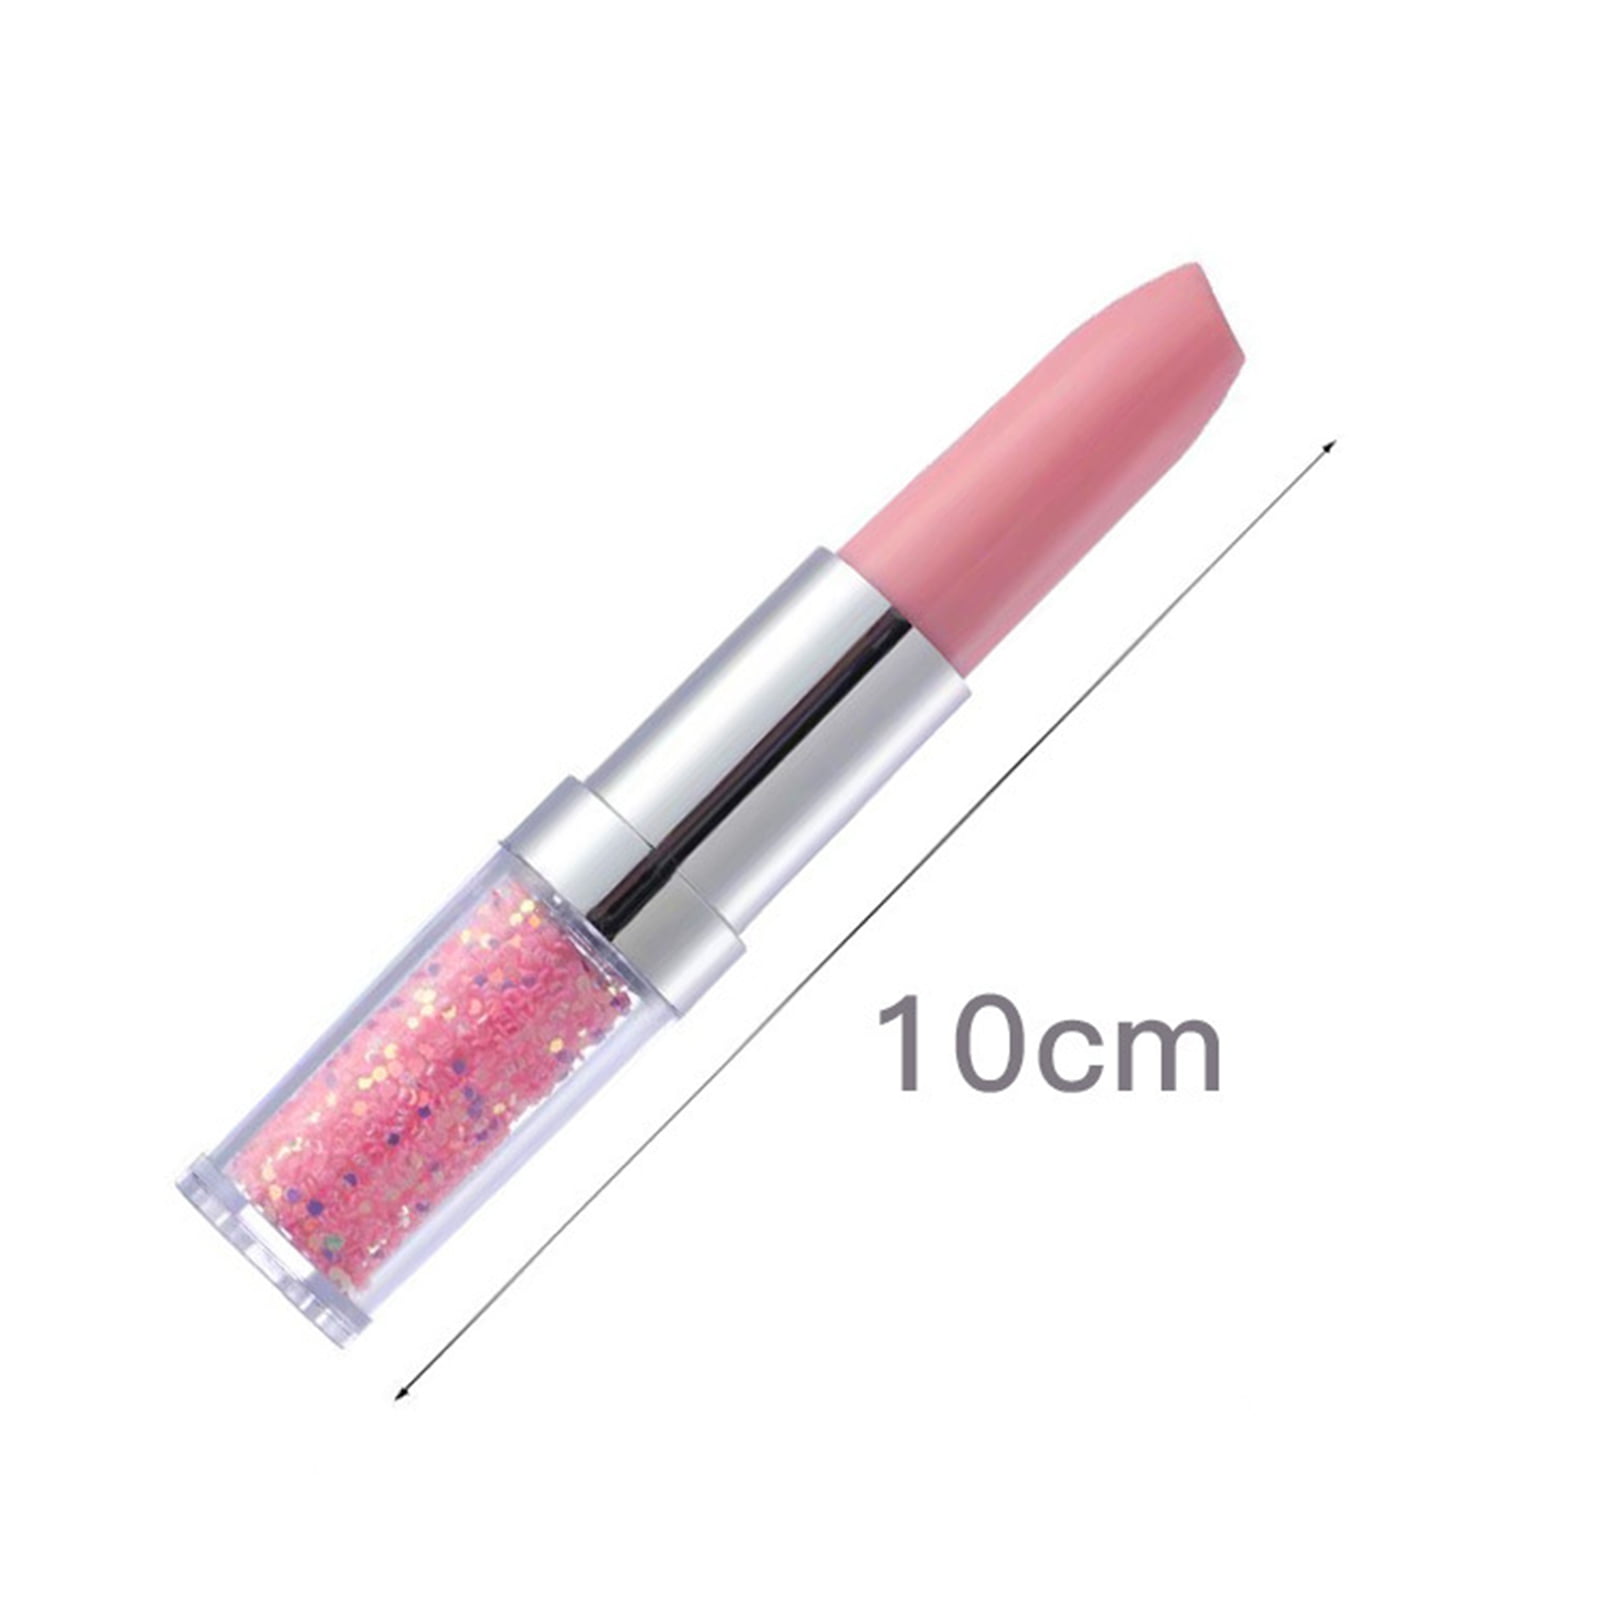  SEWACC 3pcs Lipstick Point Pen Resin Pencil DIY